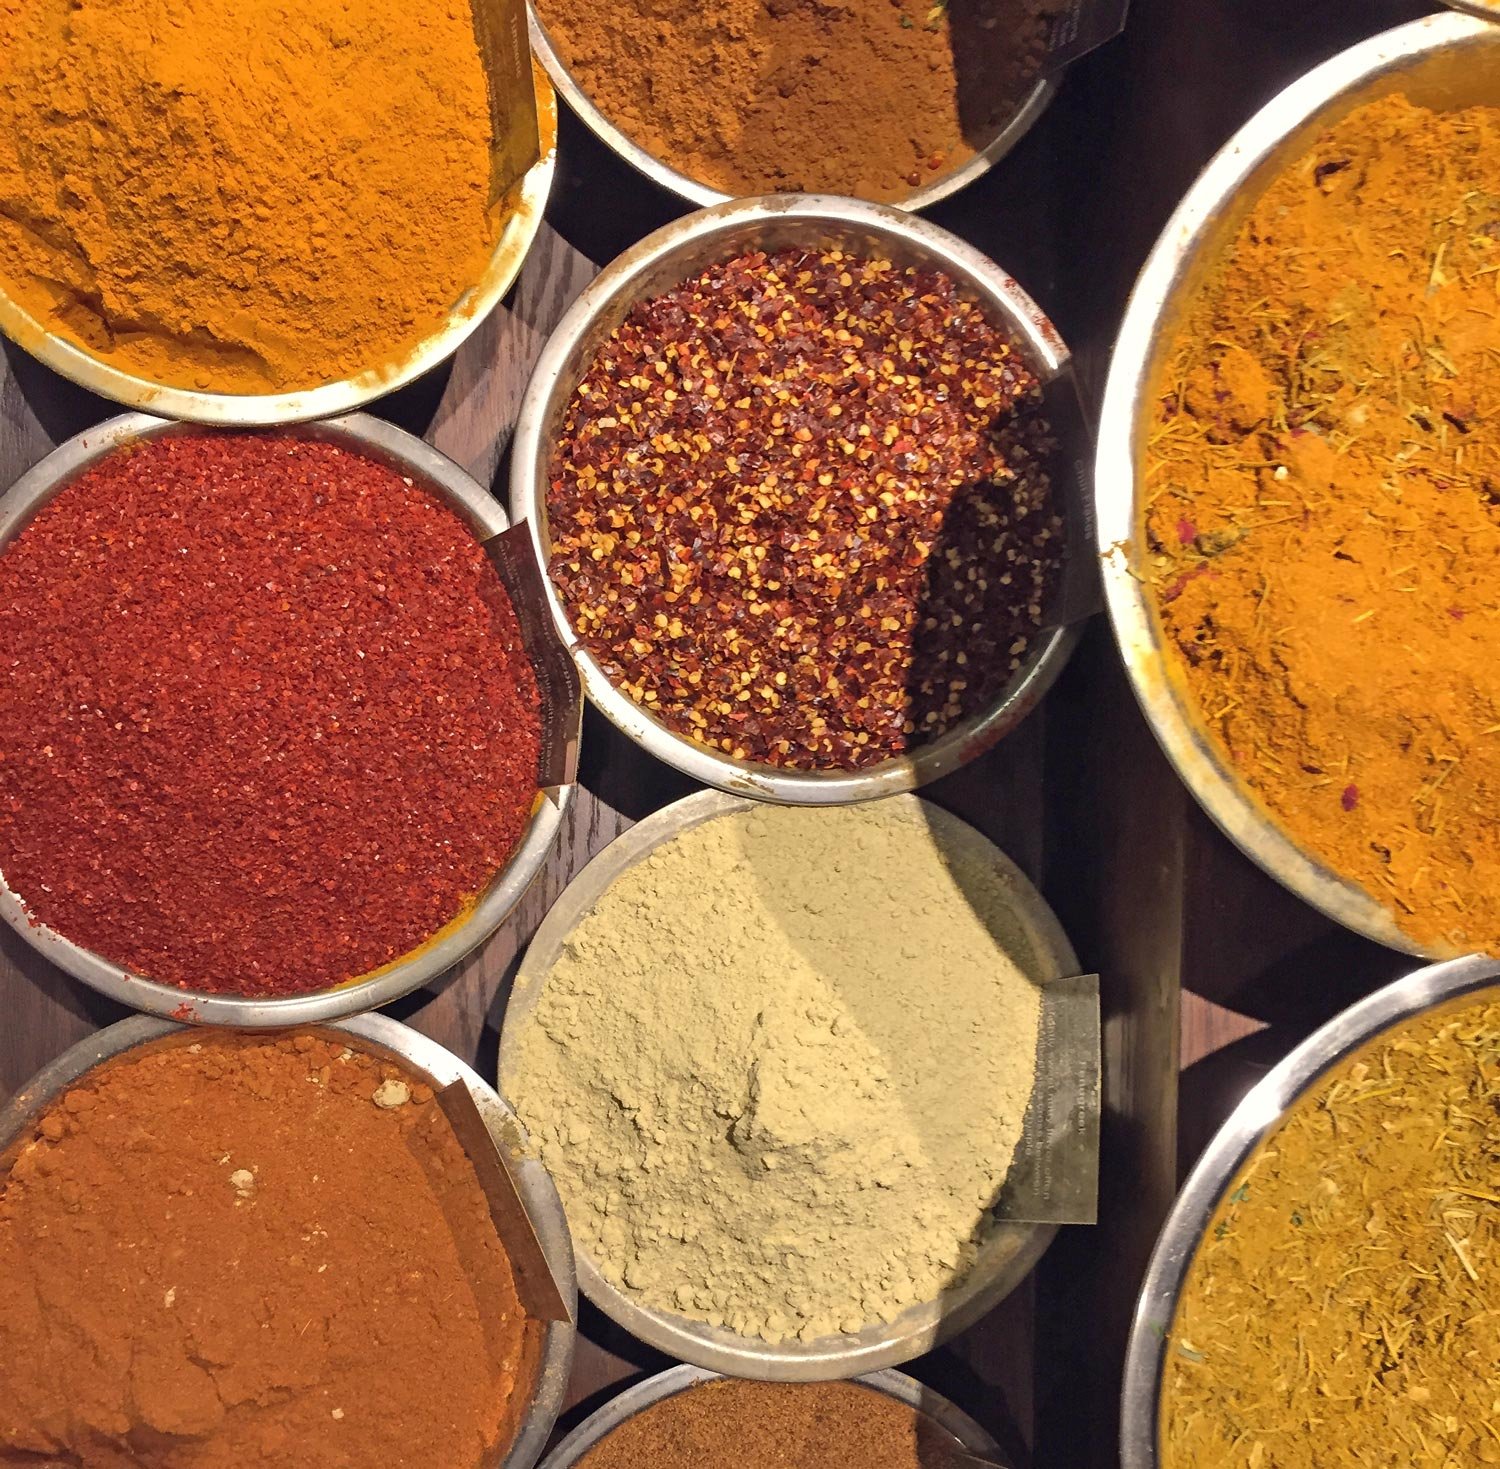 Whole-widen-world-new-york-chelsea-market-spice-shop-spices.jpg